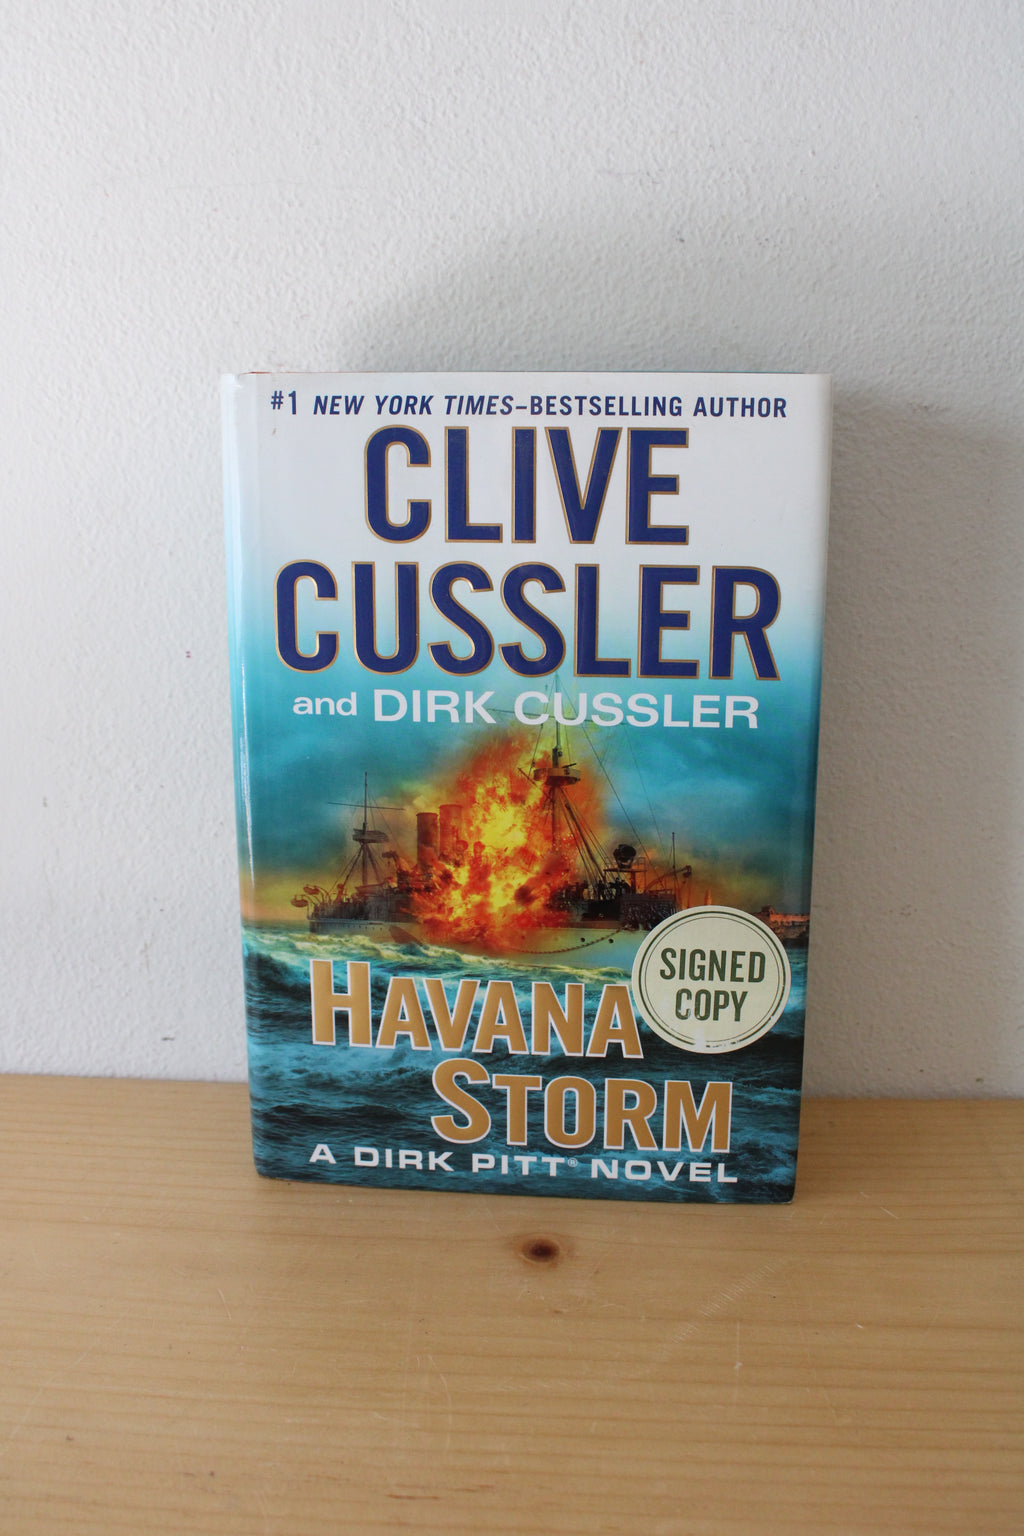 Havana Storm (A Dirk Pitt Novel). Signed Copy.